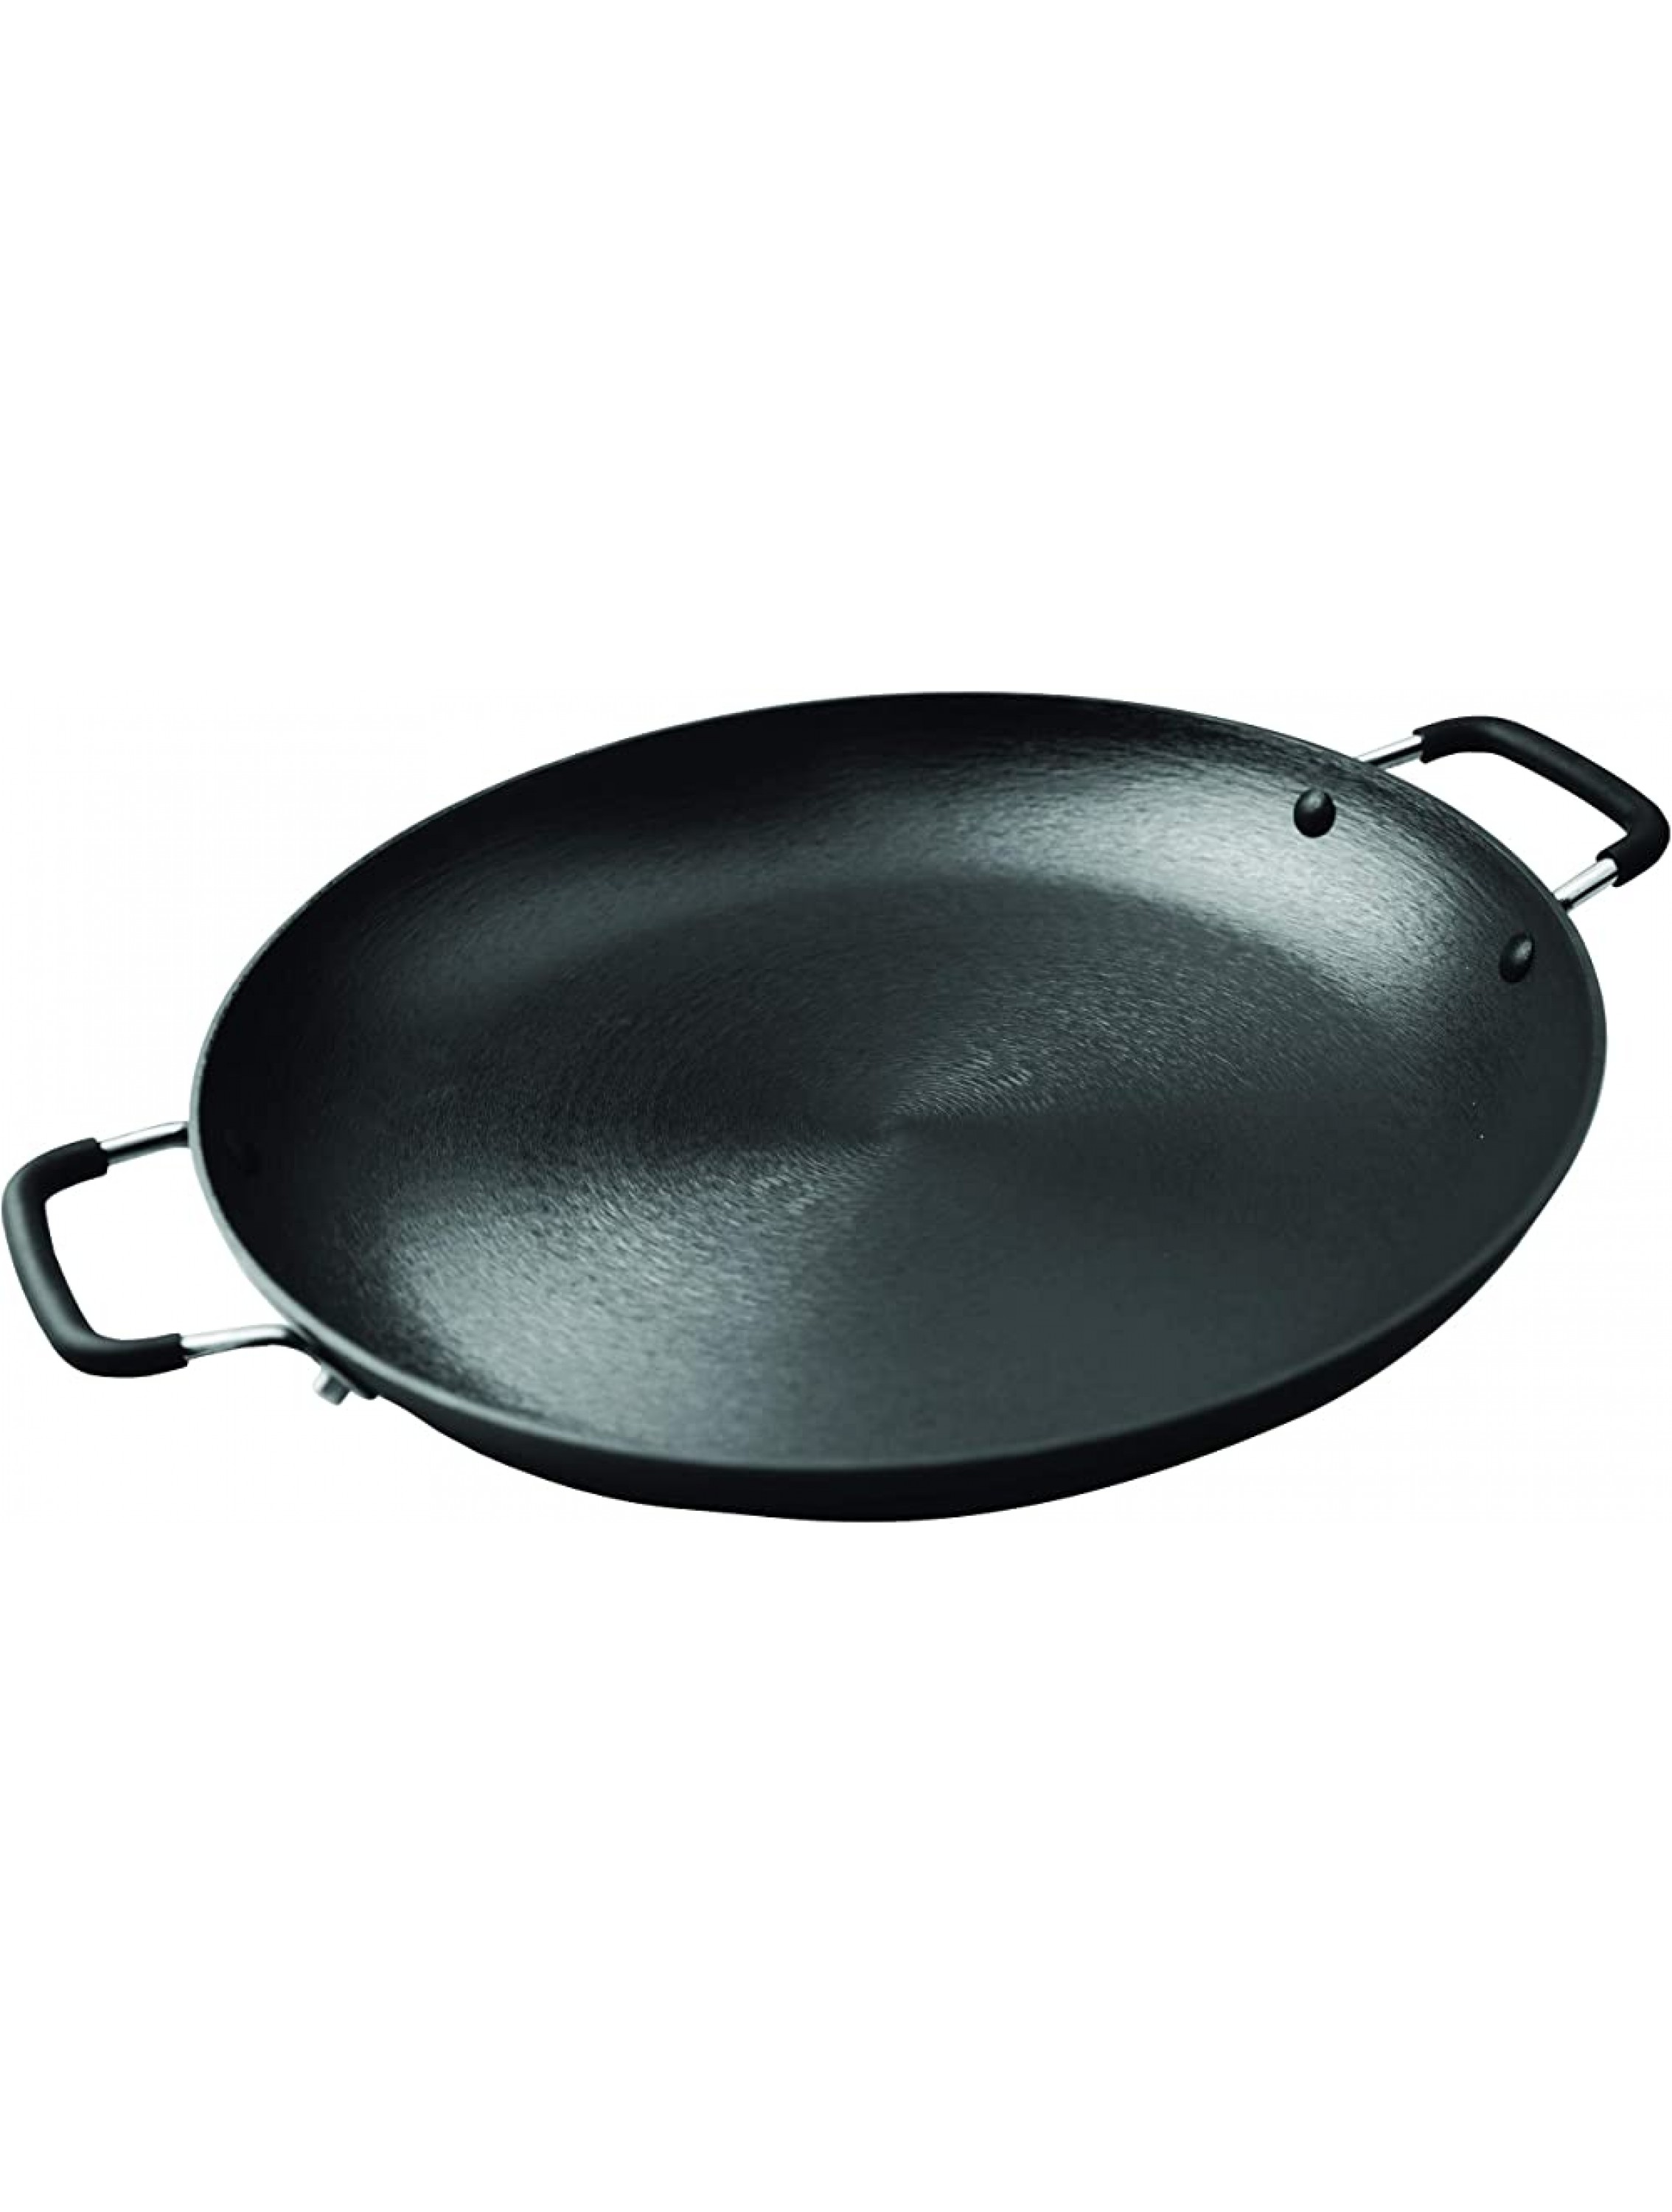 Paella Cast Iron Fry pan with 2 handles 14 Diameter - B3B67ANZX